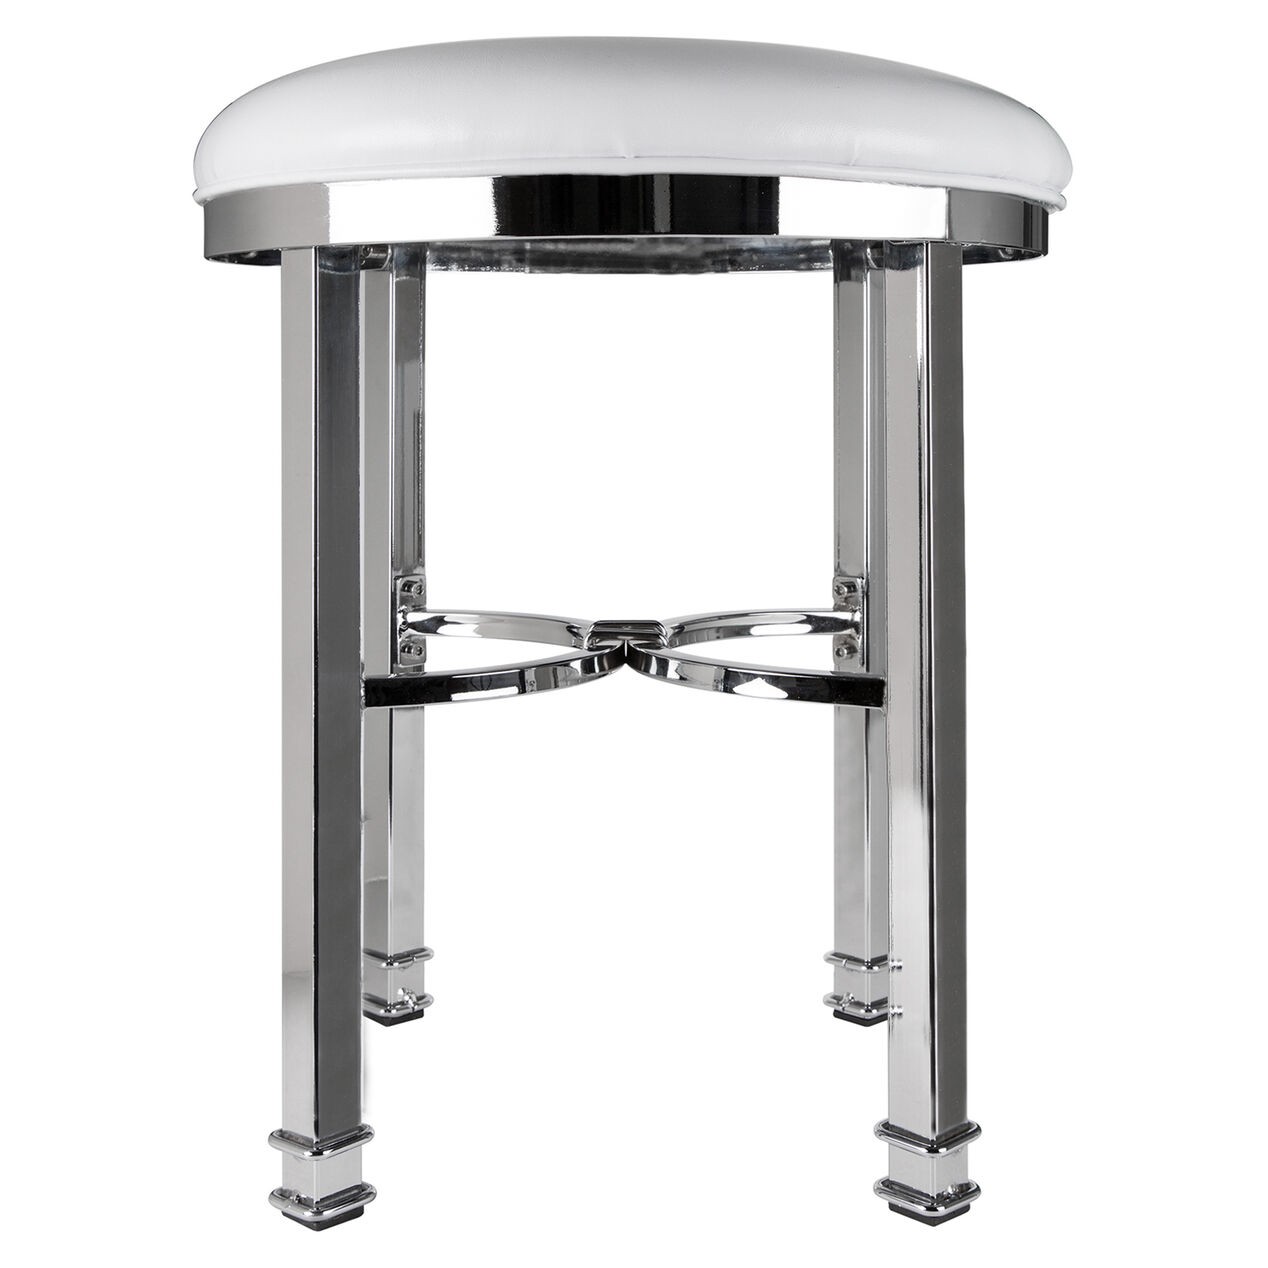 Vanity stool chanel chrome white round at home